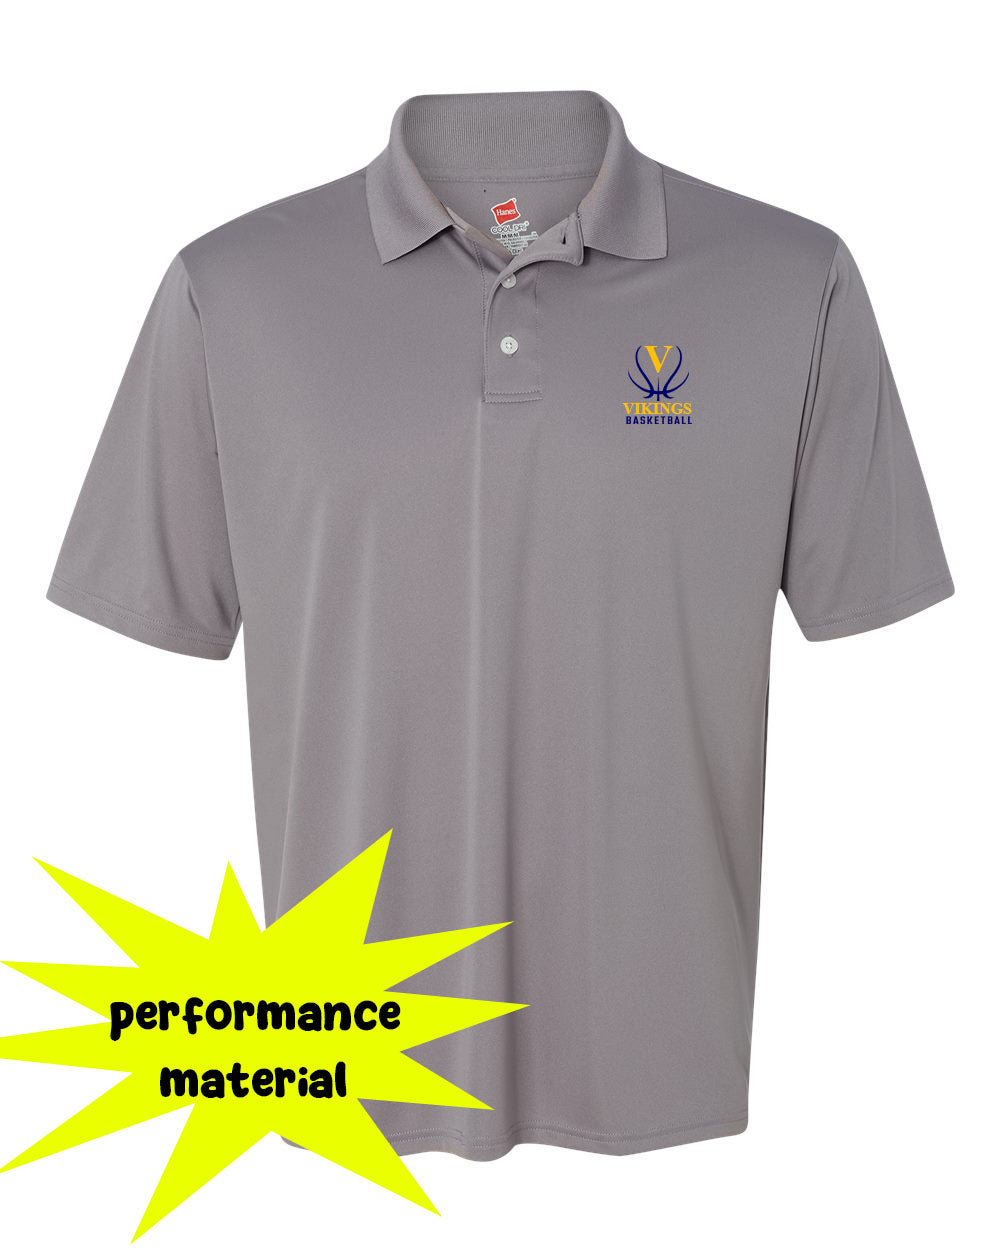 Vikings Basketball Performance Material Polo T-Shirt Design 3